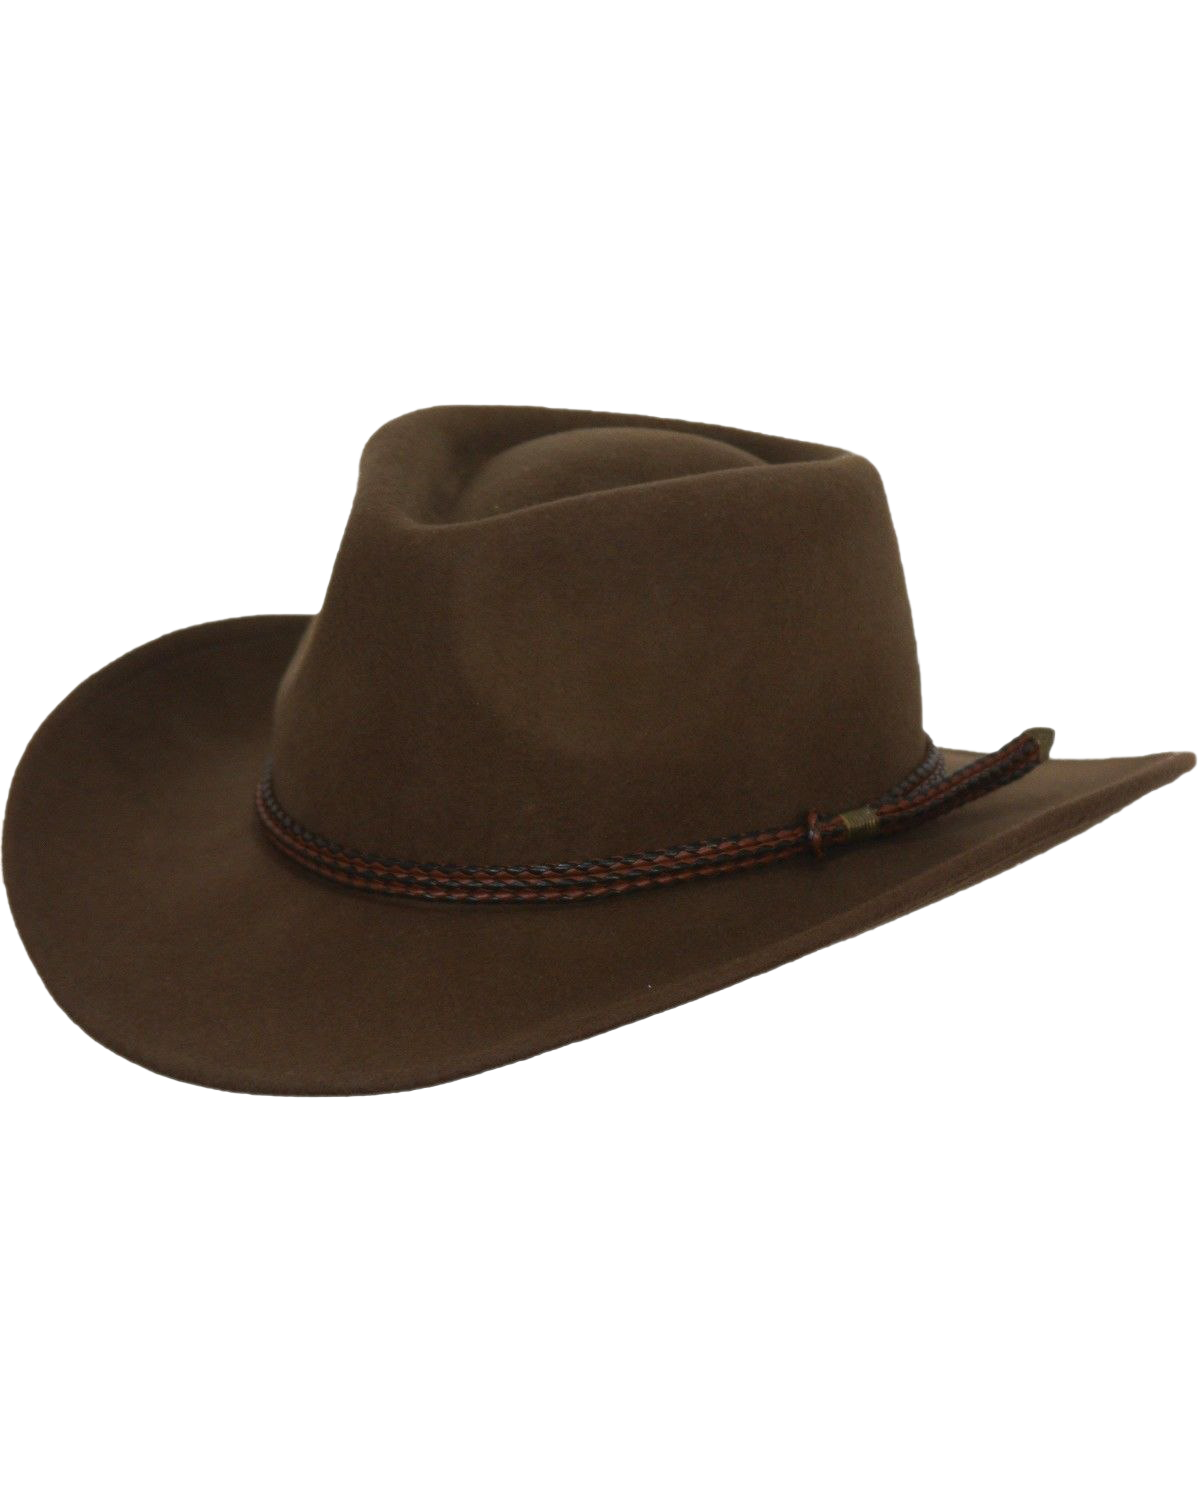 Brown Cowboy Hat PNG HD Quality